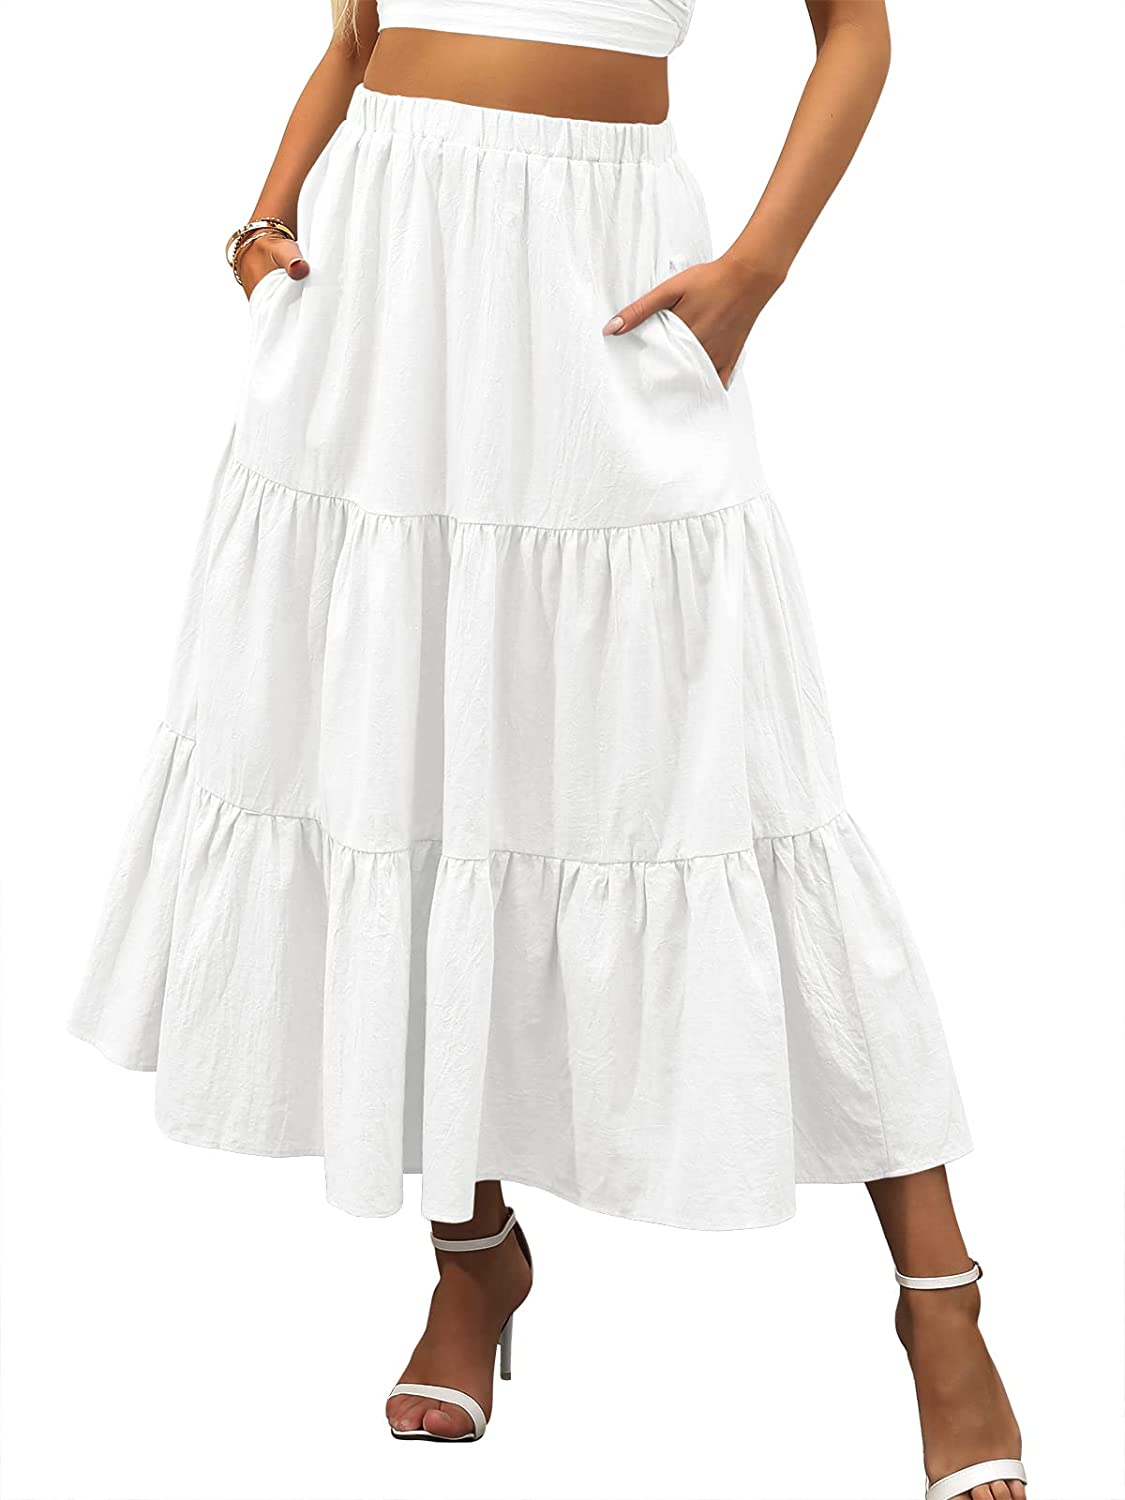 ANRABESS Women’s Summer Boho Elastic Waist Pleated A-Line Flowy Swing Tiered Long Beach Skirt Dress with Pockets 